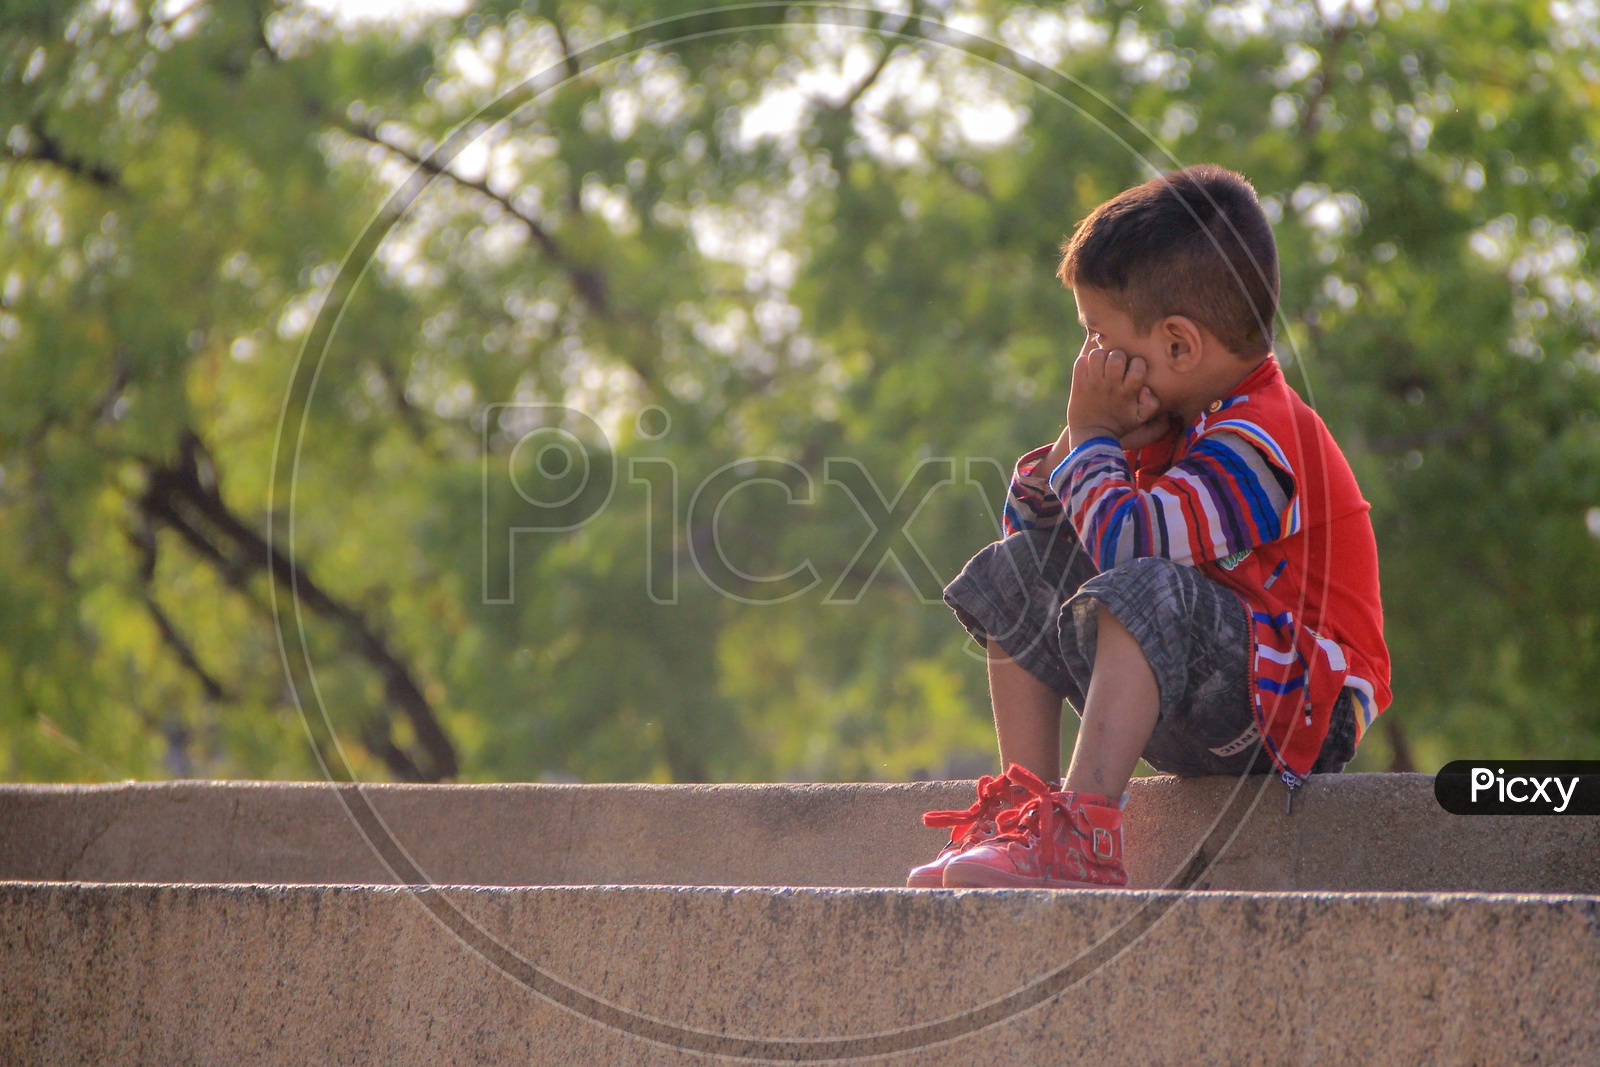 Depressed or Sad Unhappy Child sitting